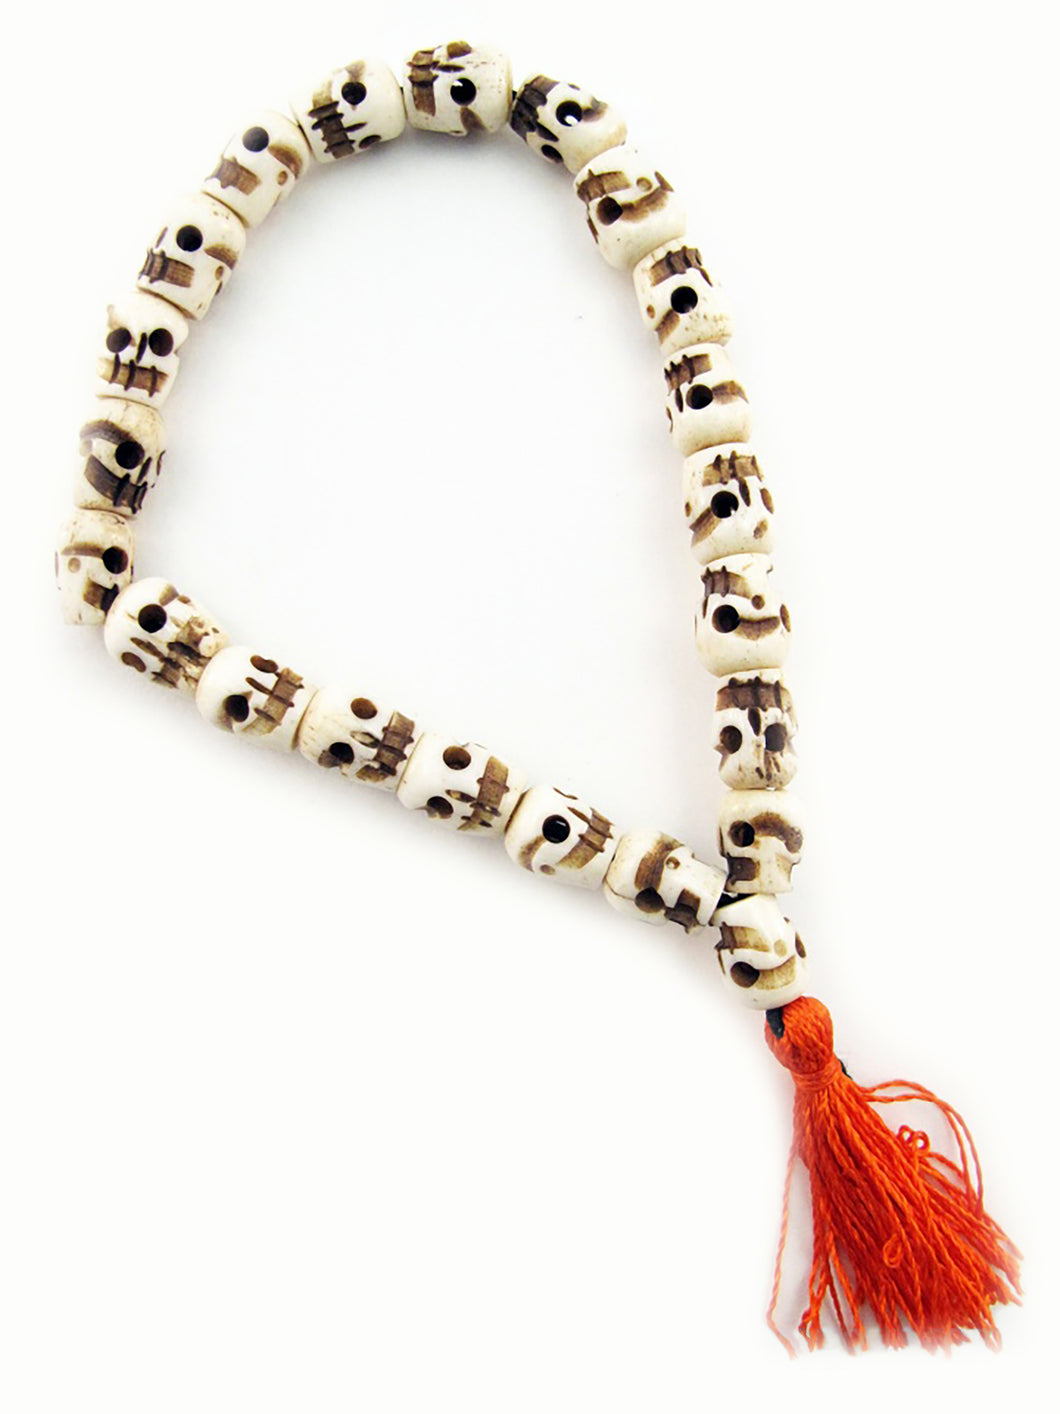 Skull Bracelet of Yak Bone Beads with Orange Cotton Tassel Small